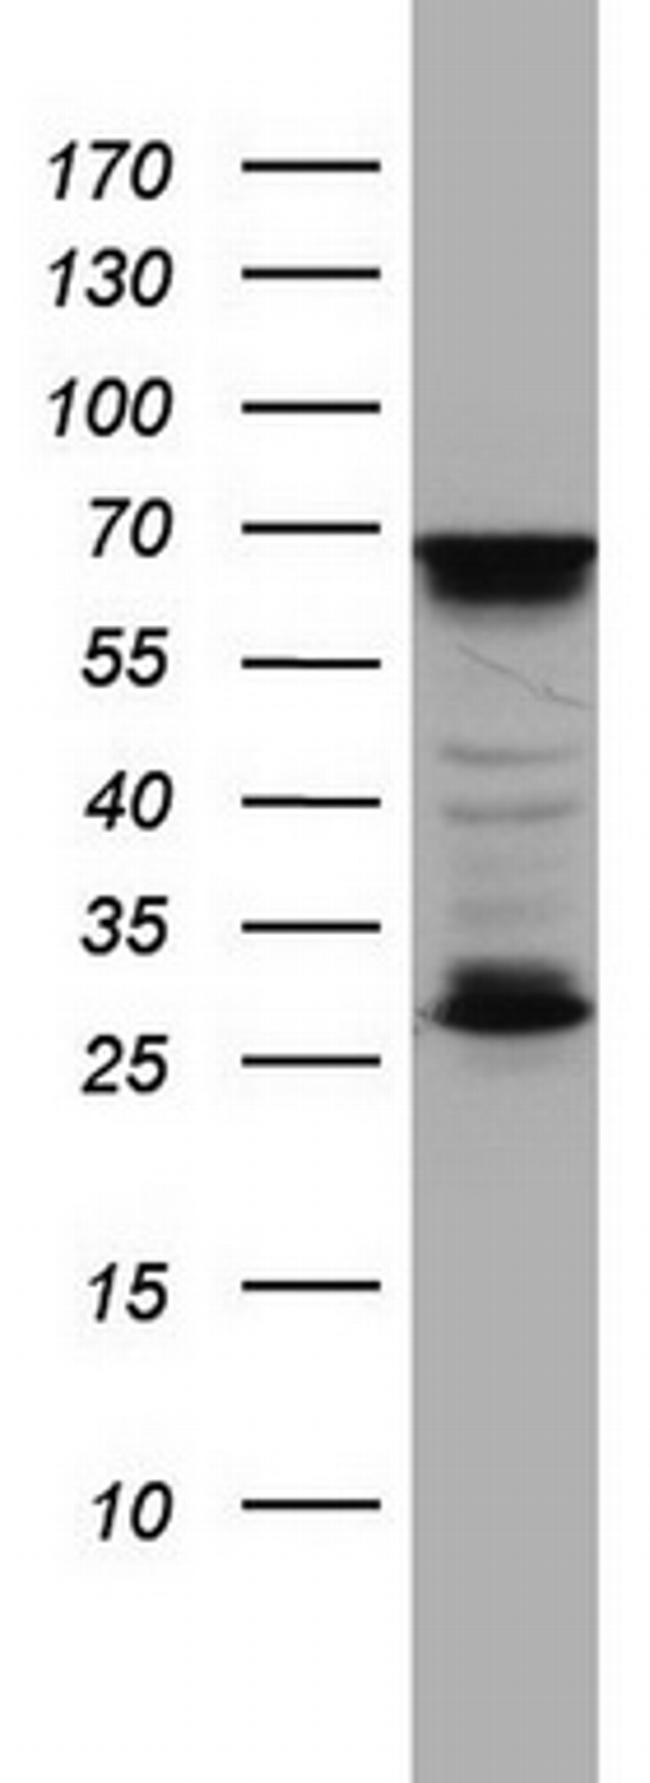 MTDH Antibody in Western Blot (WB)